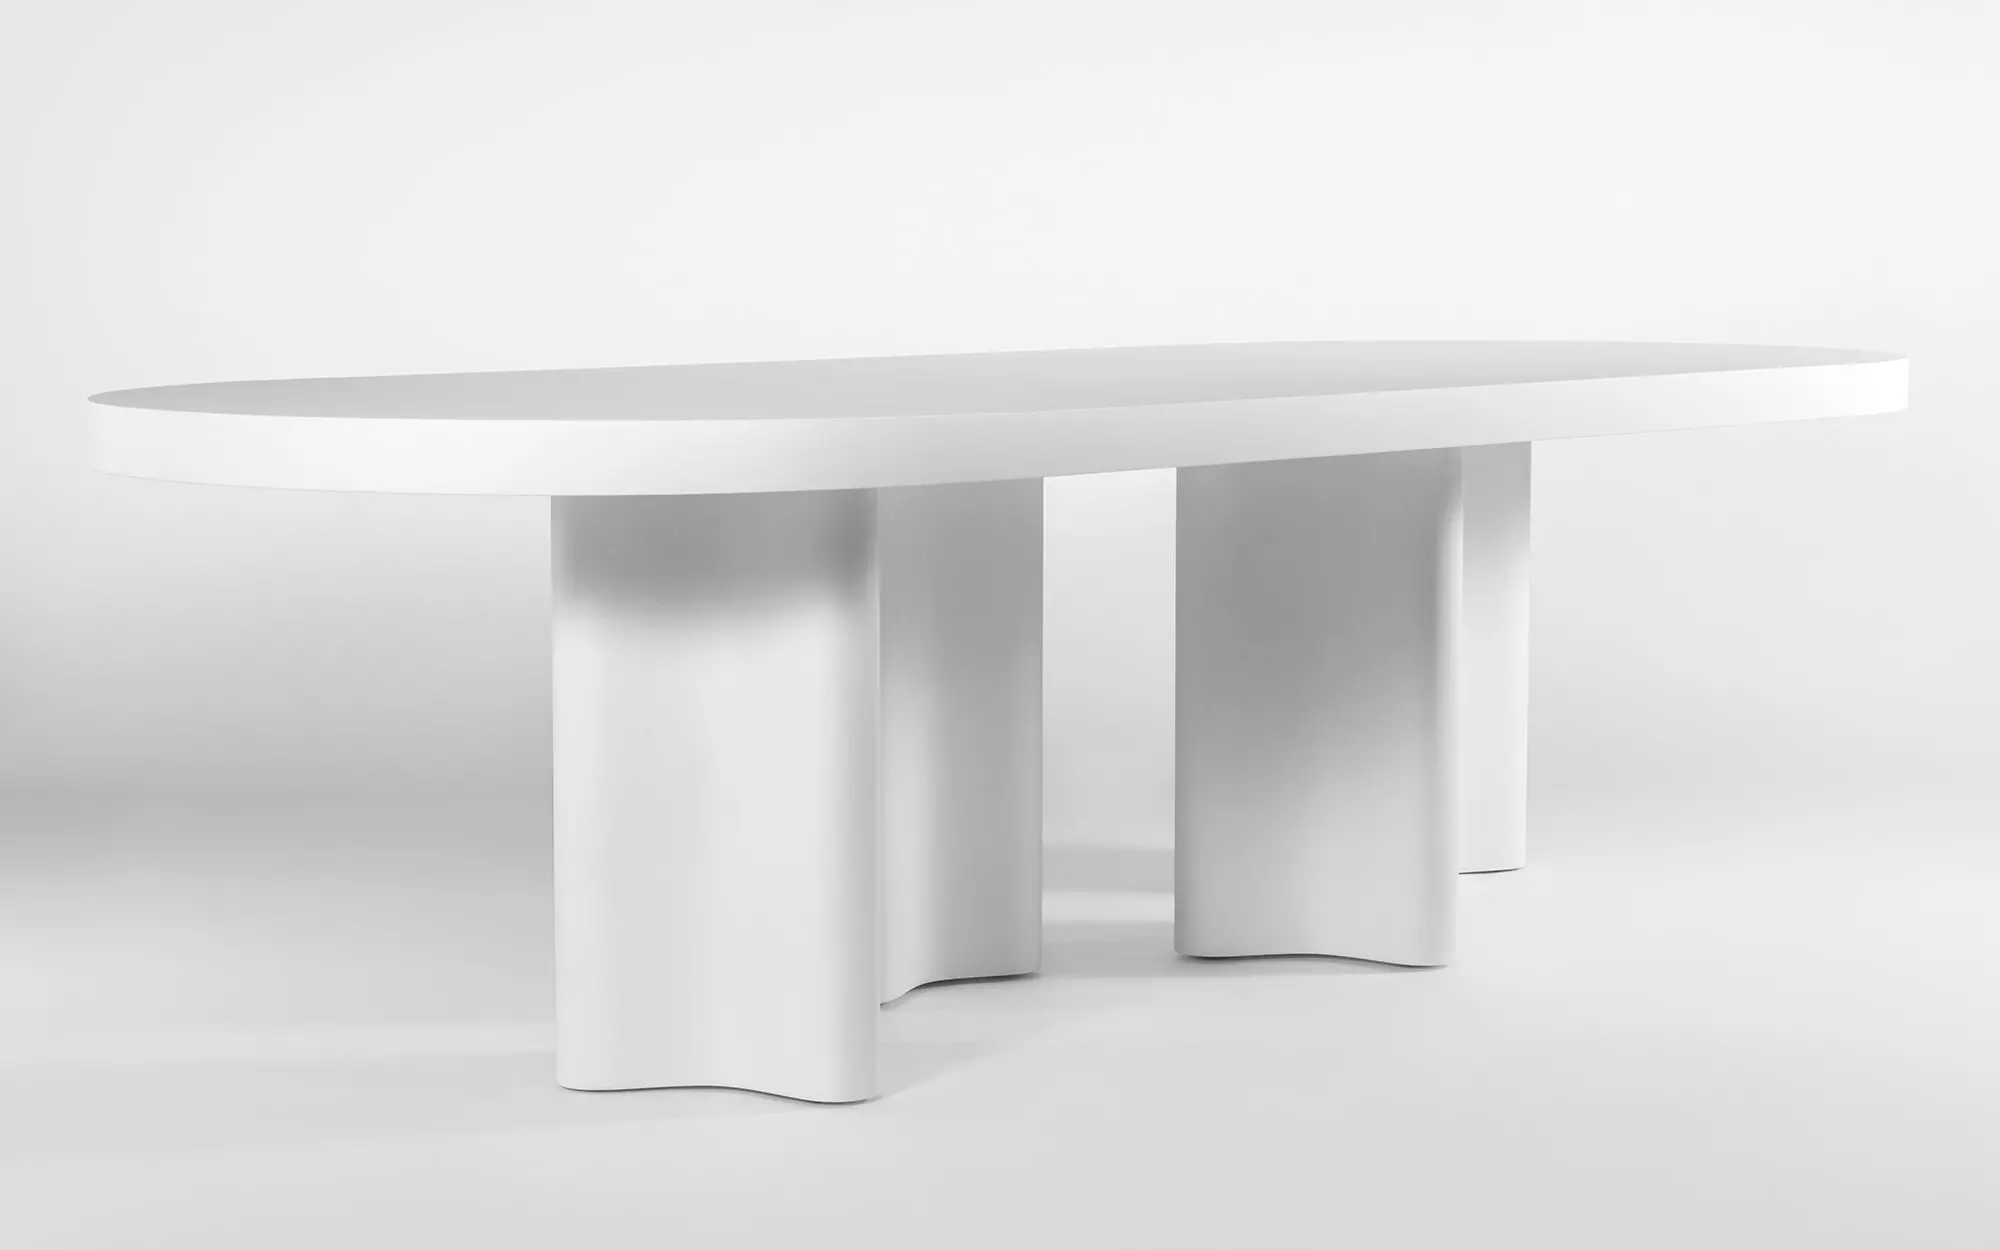 Azo oval table - François Bauchet - Miscellaneous - Galerie kreo